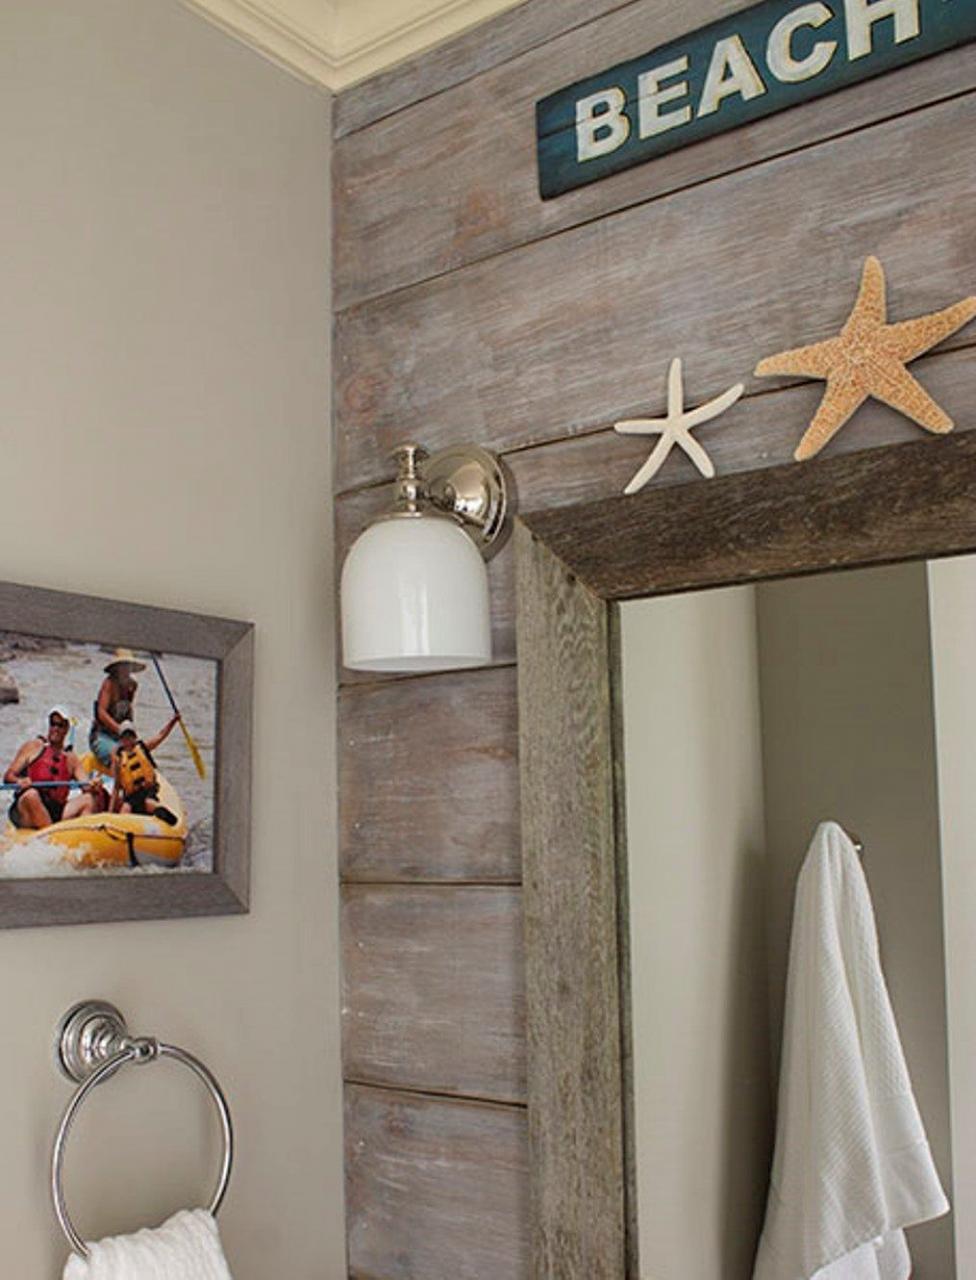 starfish design in bathrooms Google Search Beach bathroom decor